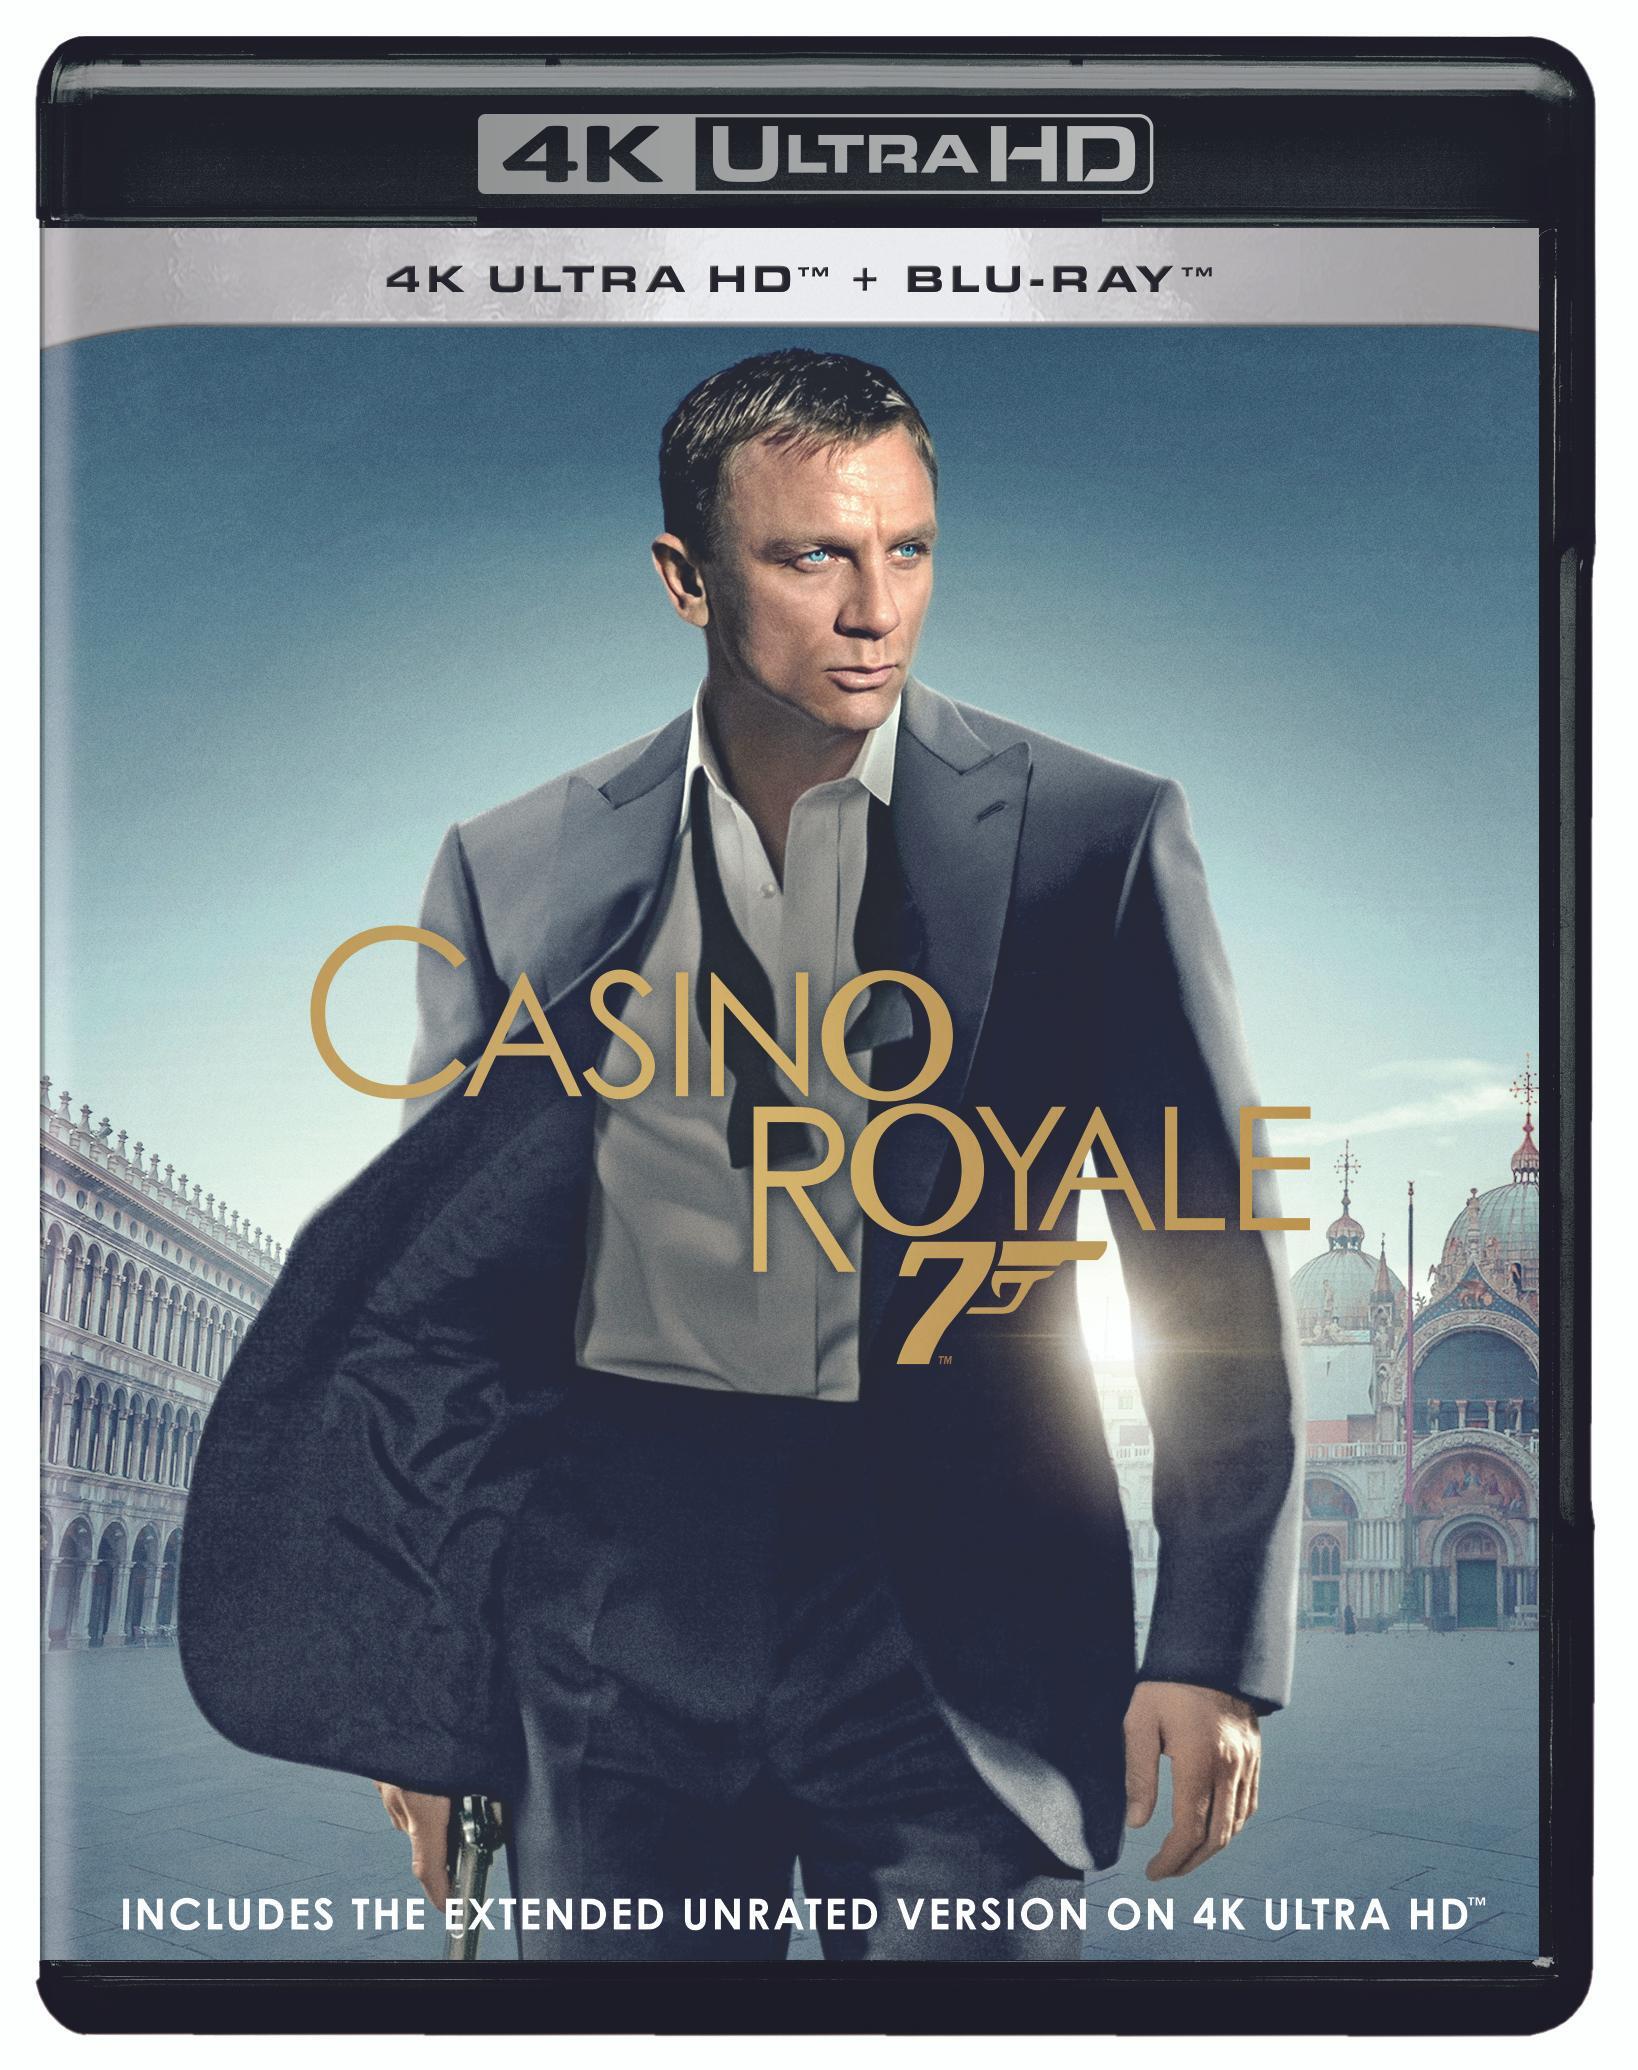 Casino Royale (4K Ultra HD + Blu-ray) - UHD [ 2006 ]  - Action Movies On 4K Ultra HD Blu-ray - Movies On GRUV